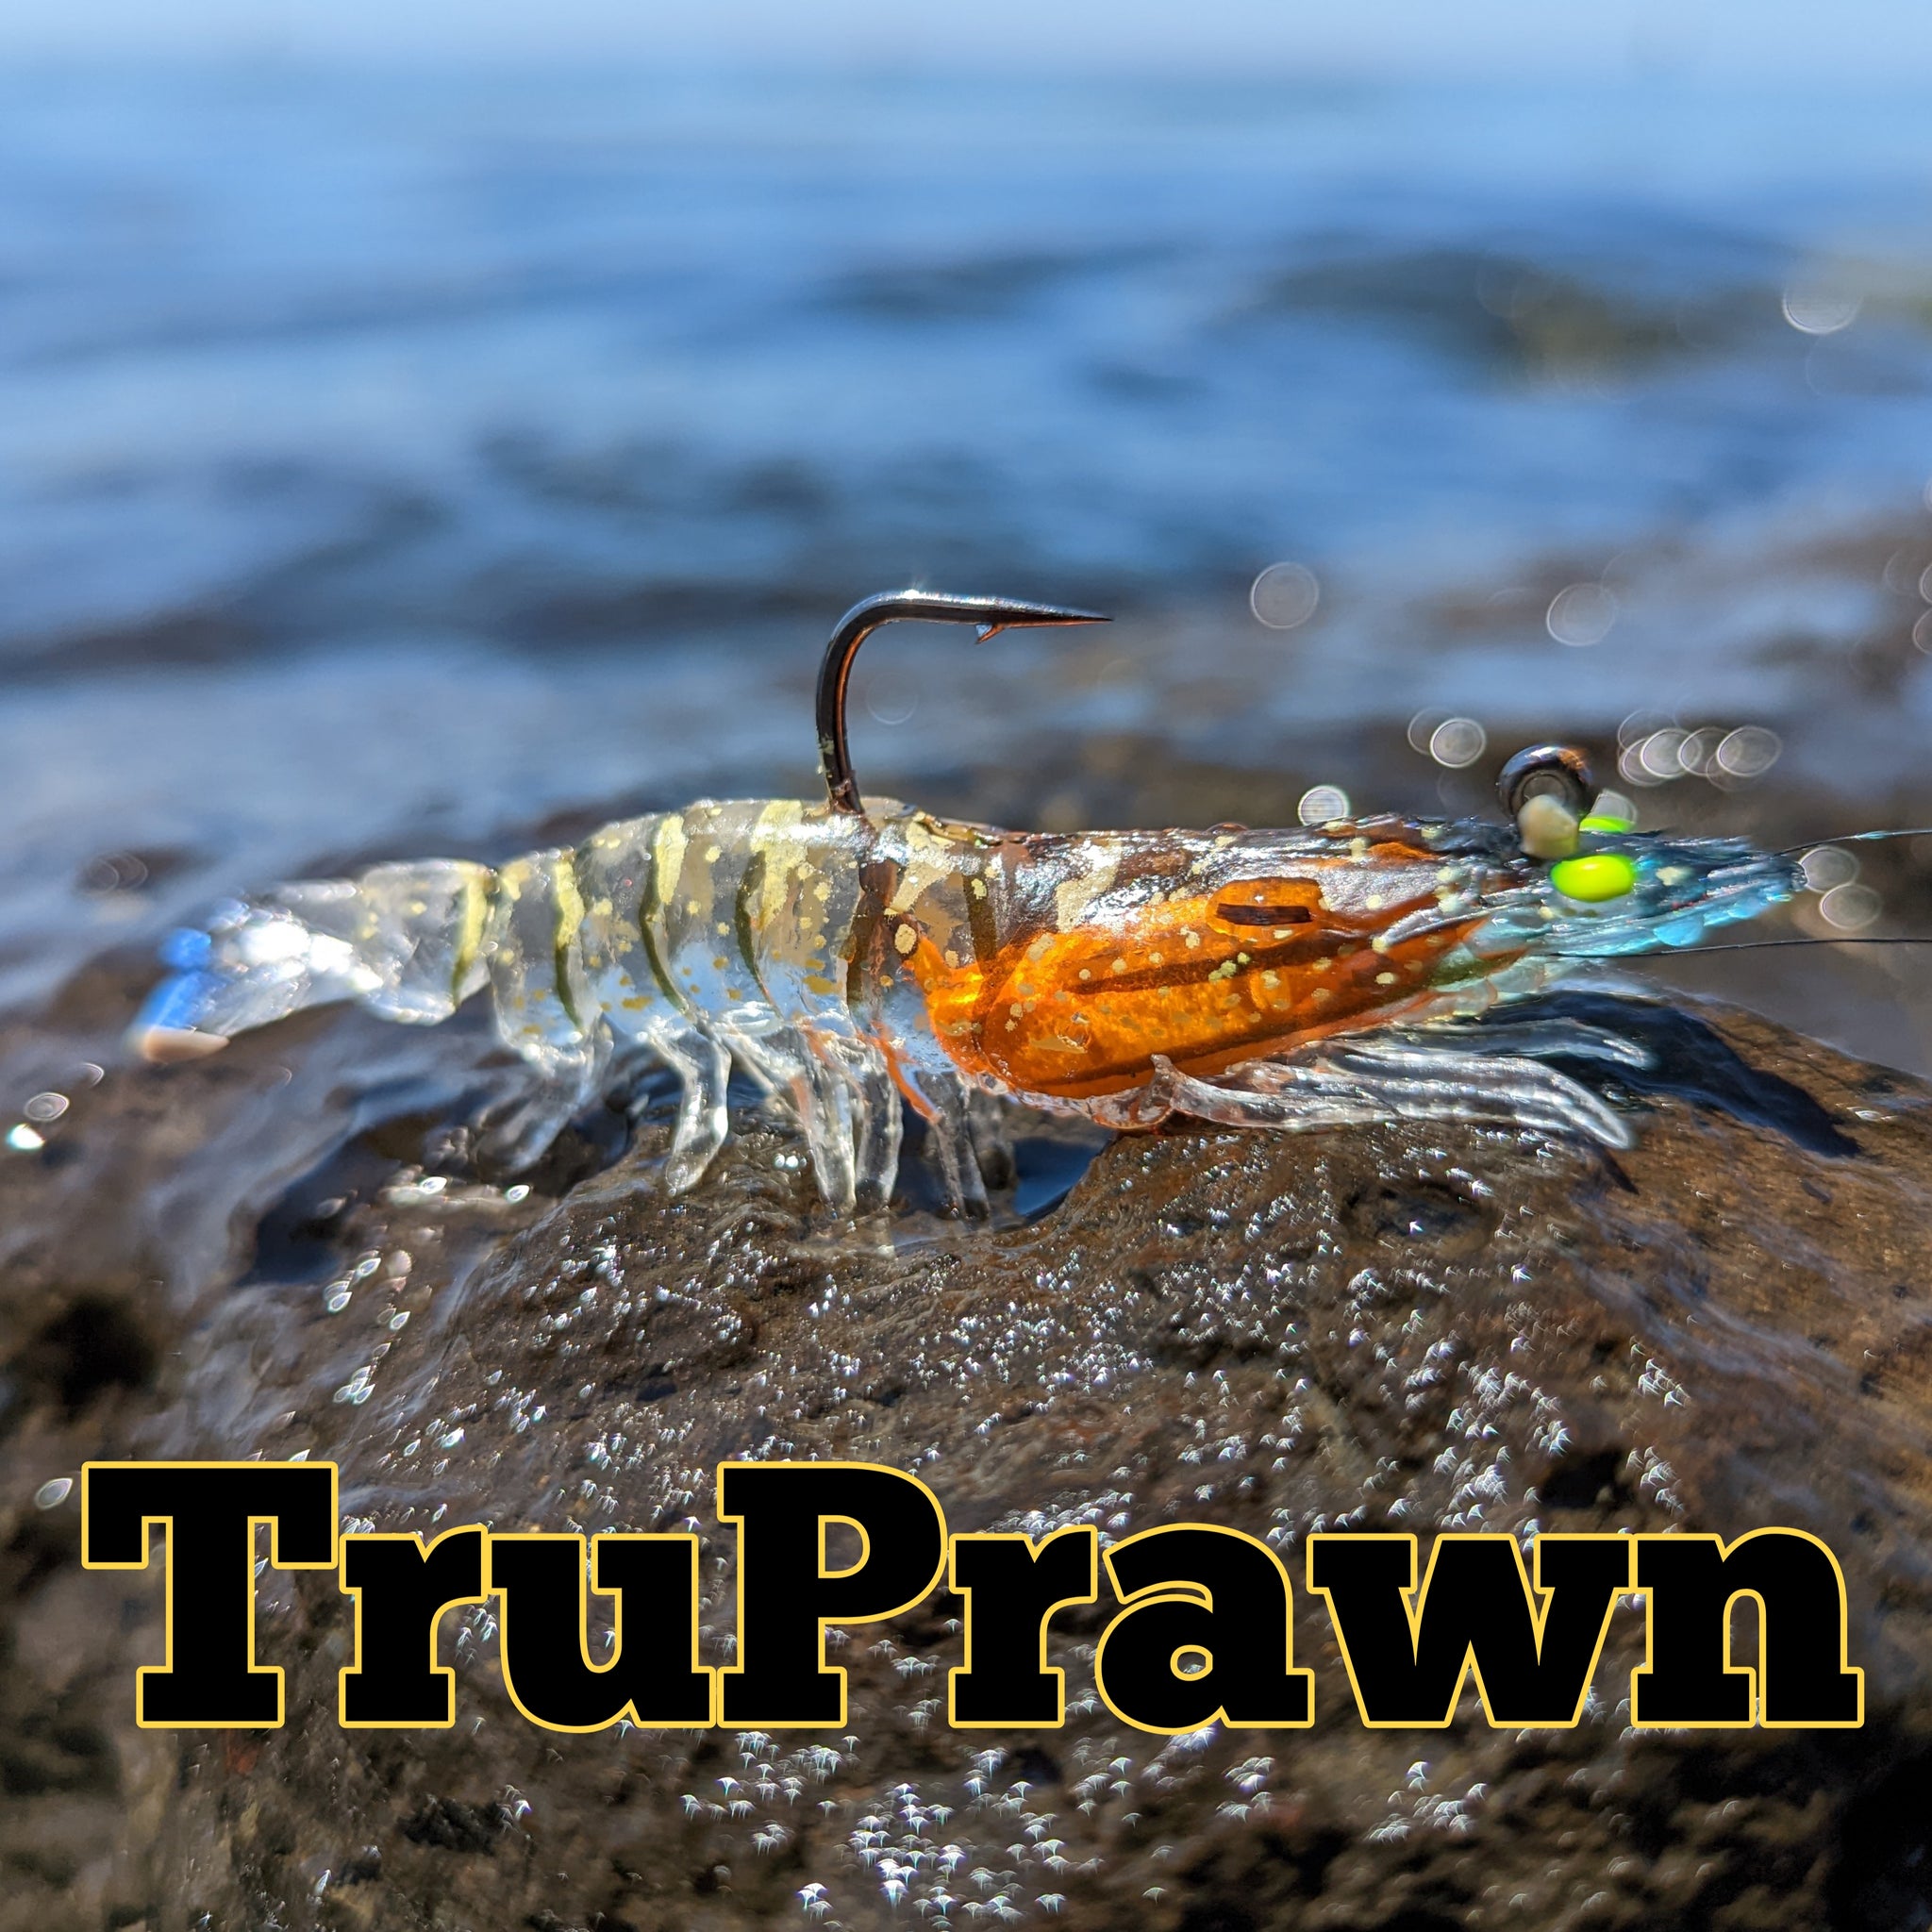 TruPrawn - Hyper realistic prawn/shrimp imitation lure